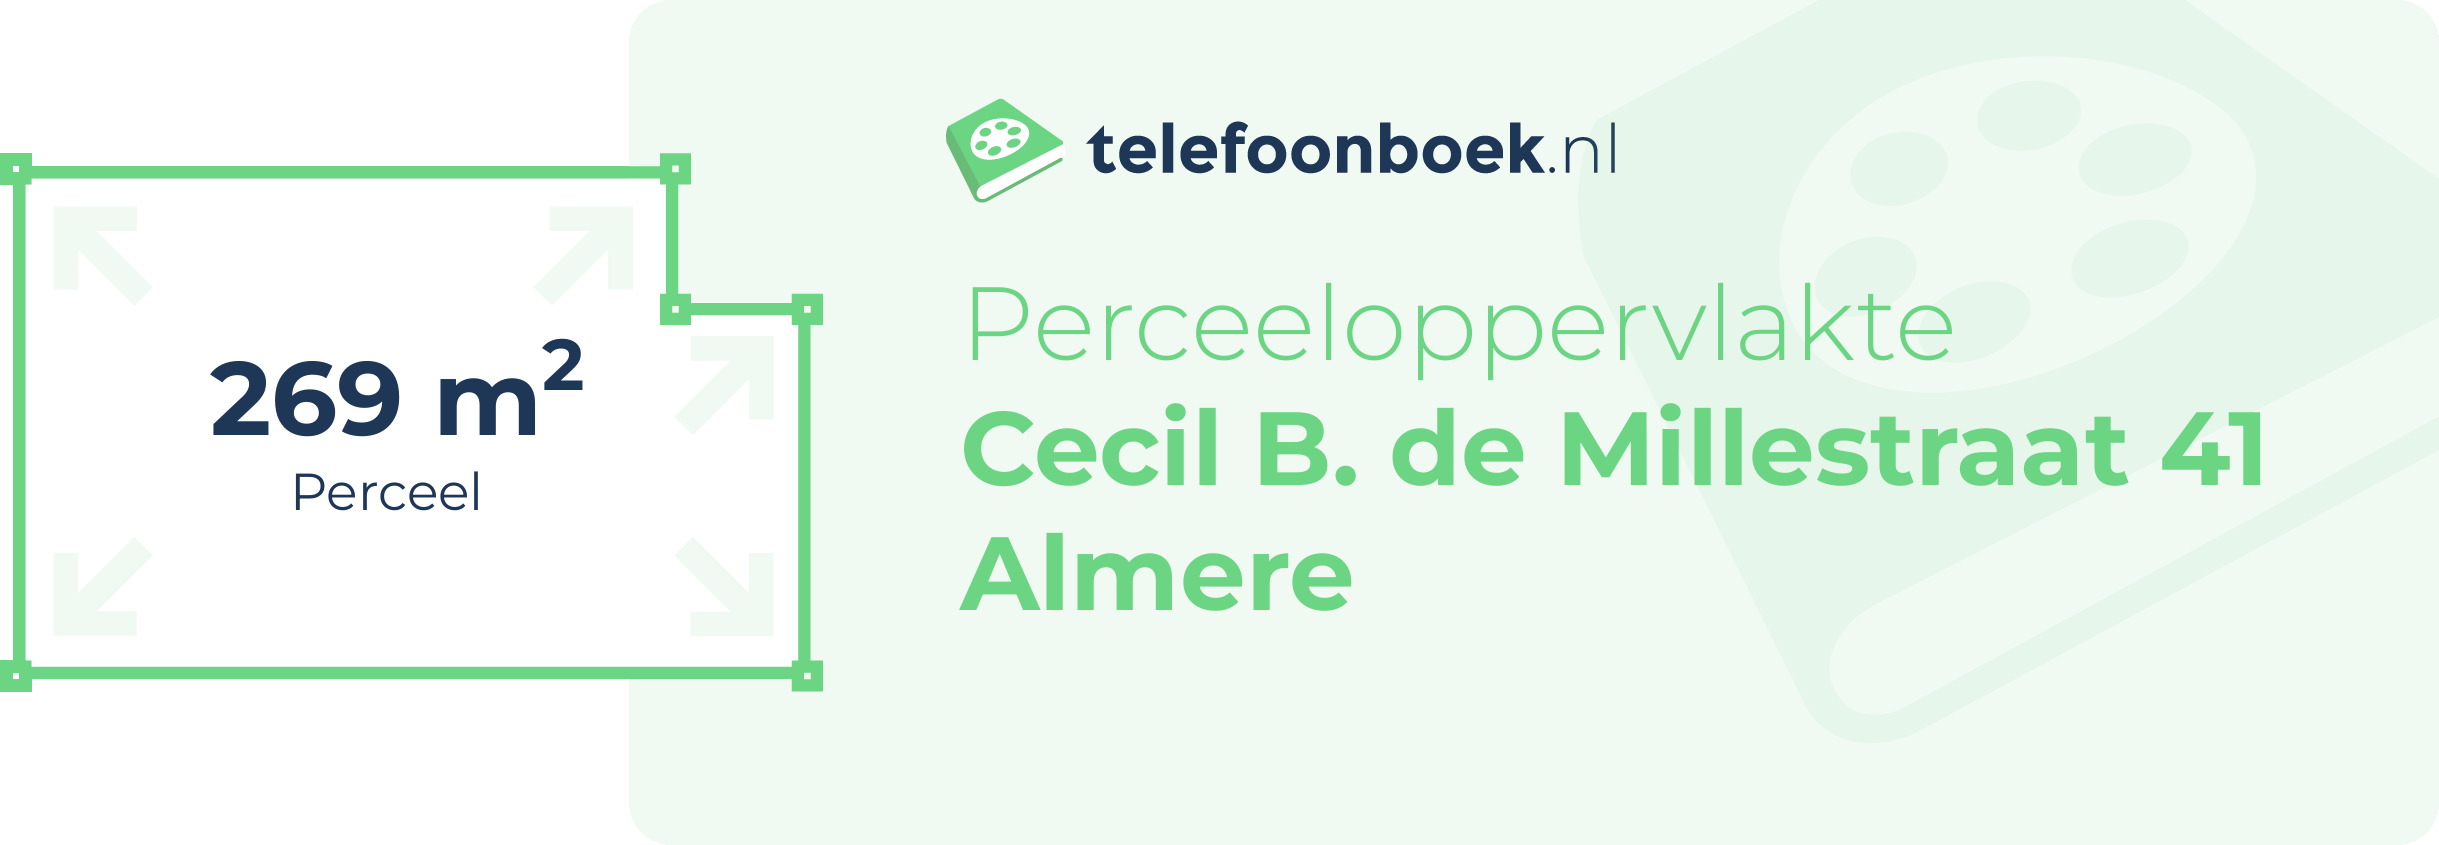 Perceeloppervlakte Cecil B. De Millestraat 41 Almere